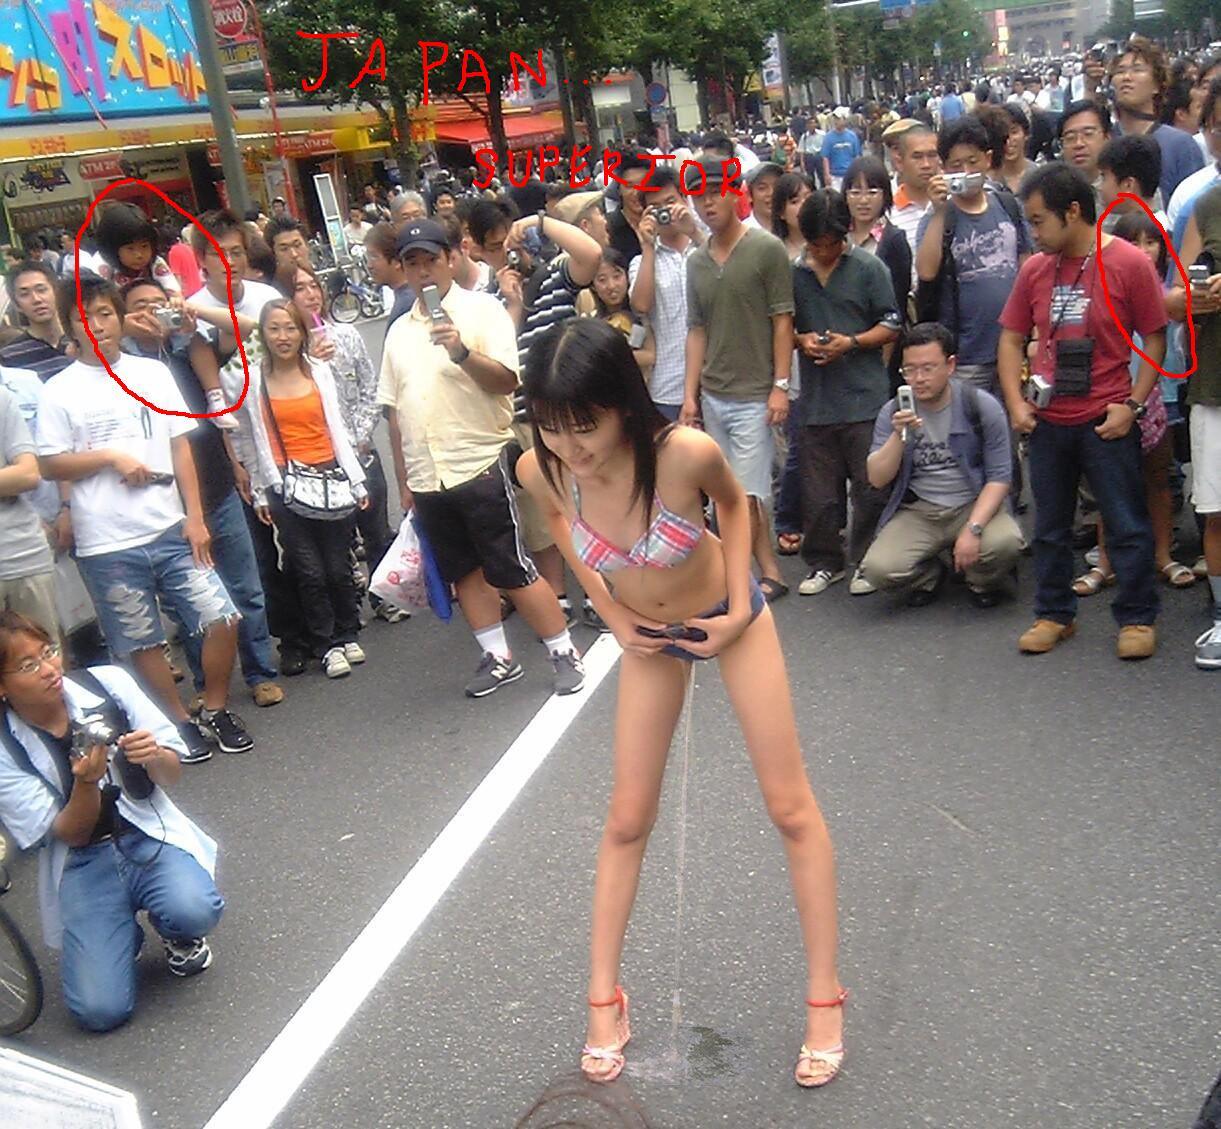 Japanese girls peeing standing up